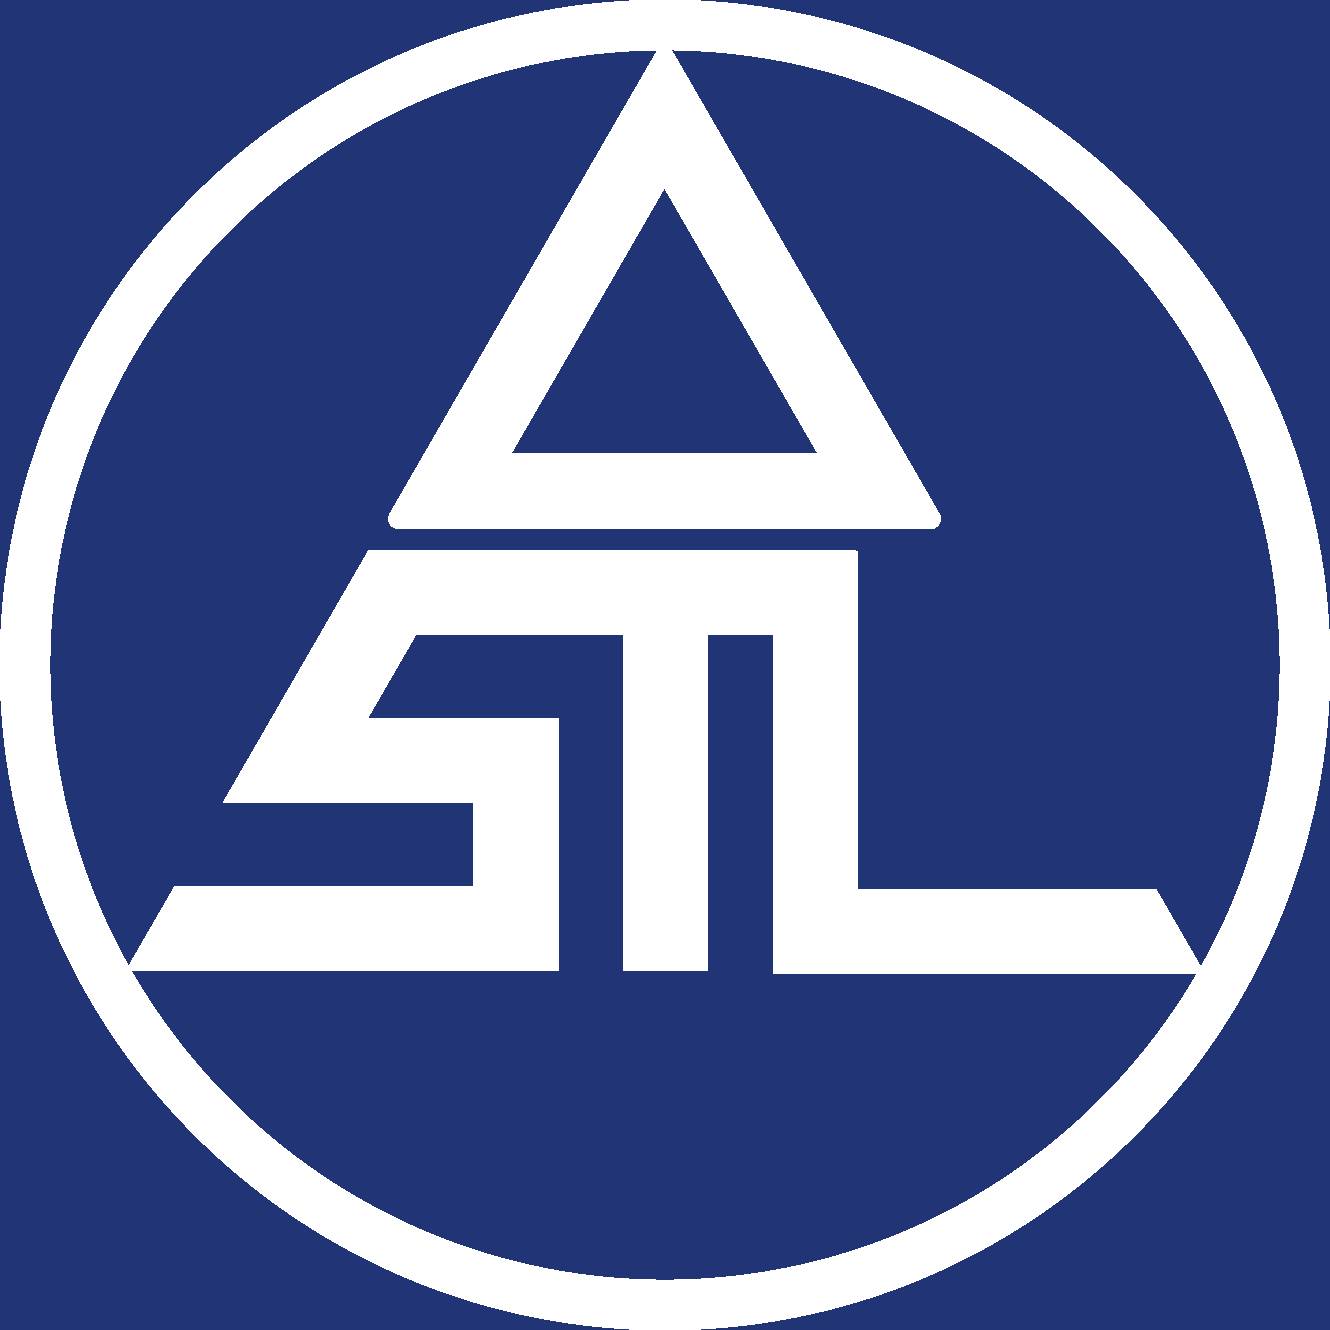 astl logo1